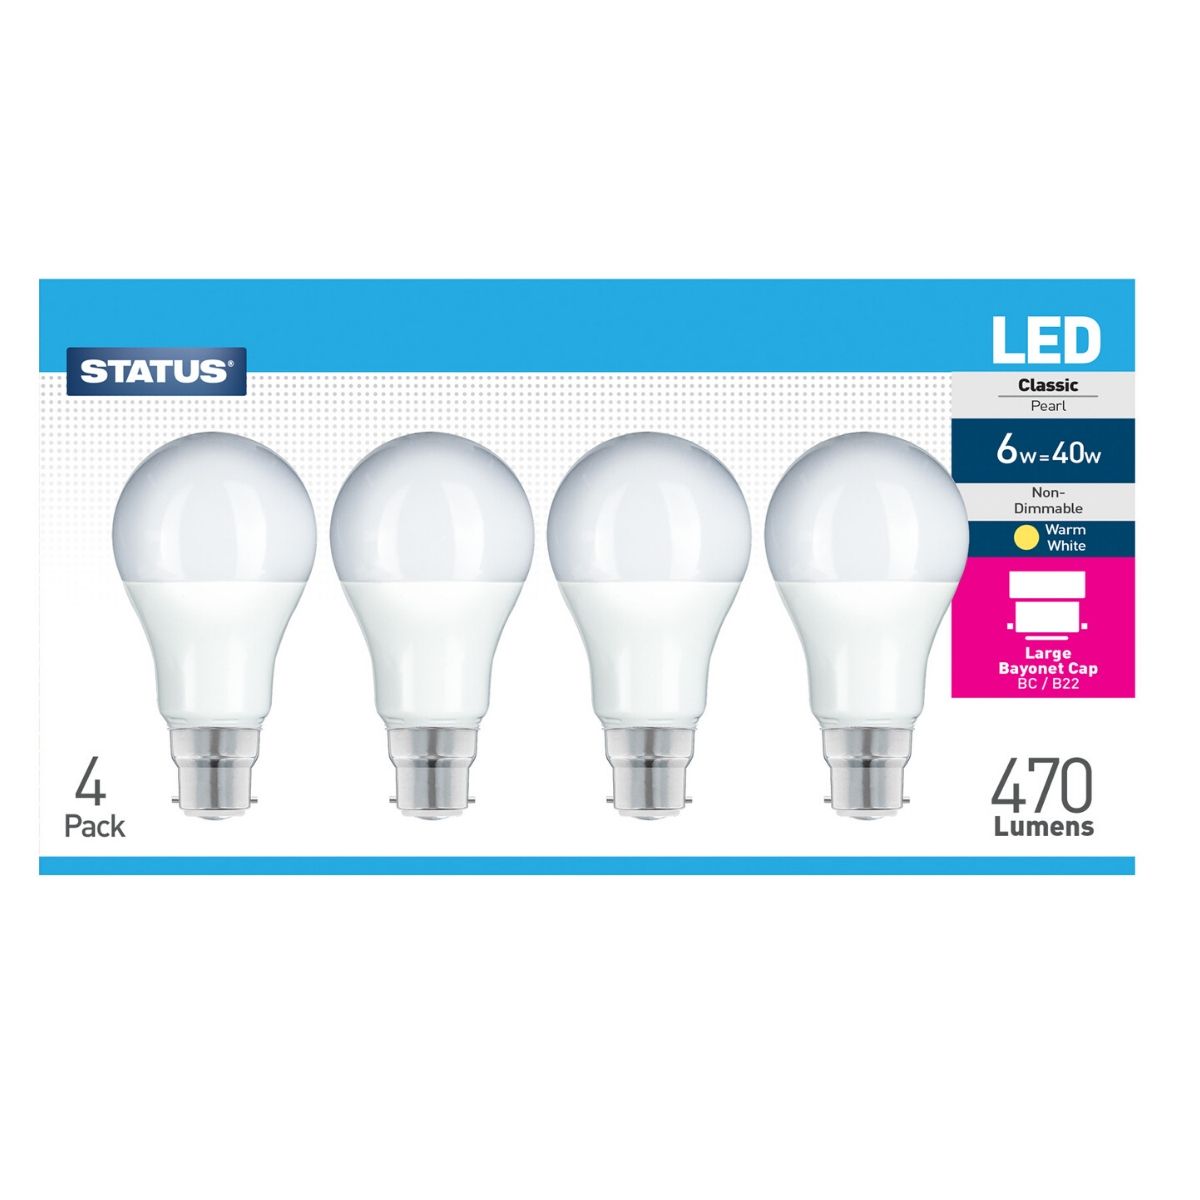 View 4 x 6w B22 LED Light Bulbs Warm White information